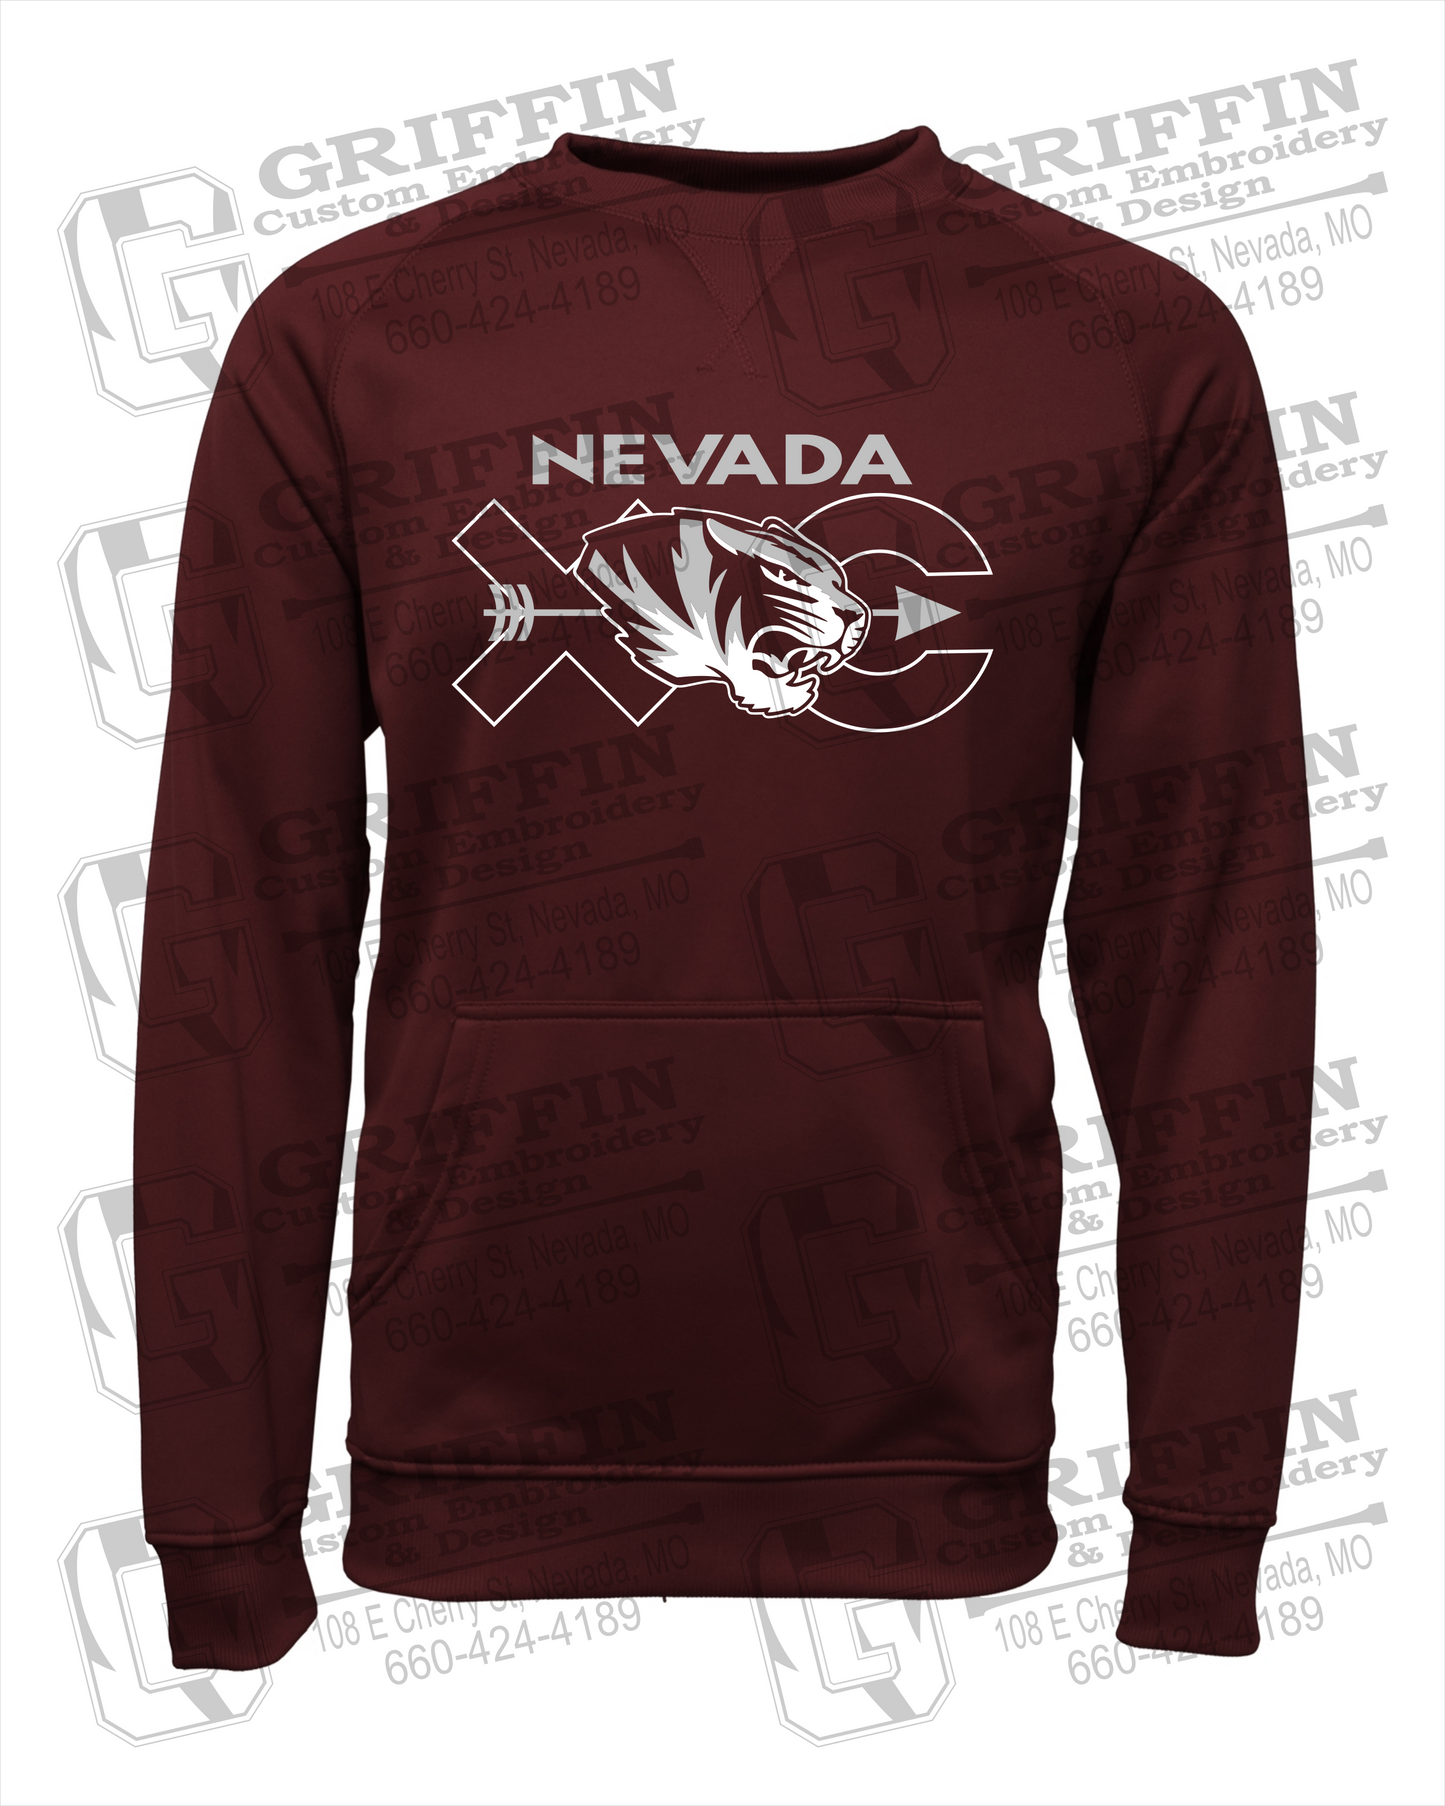 Nevada Tigers 23-T Sweatshirt - Cross Country